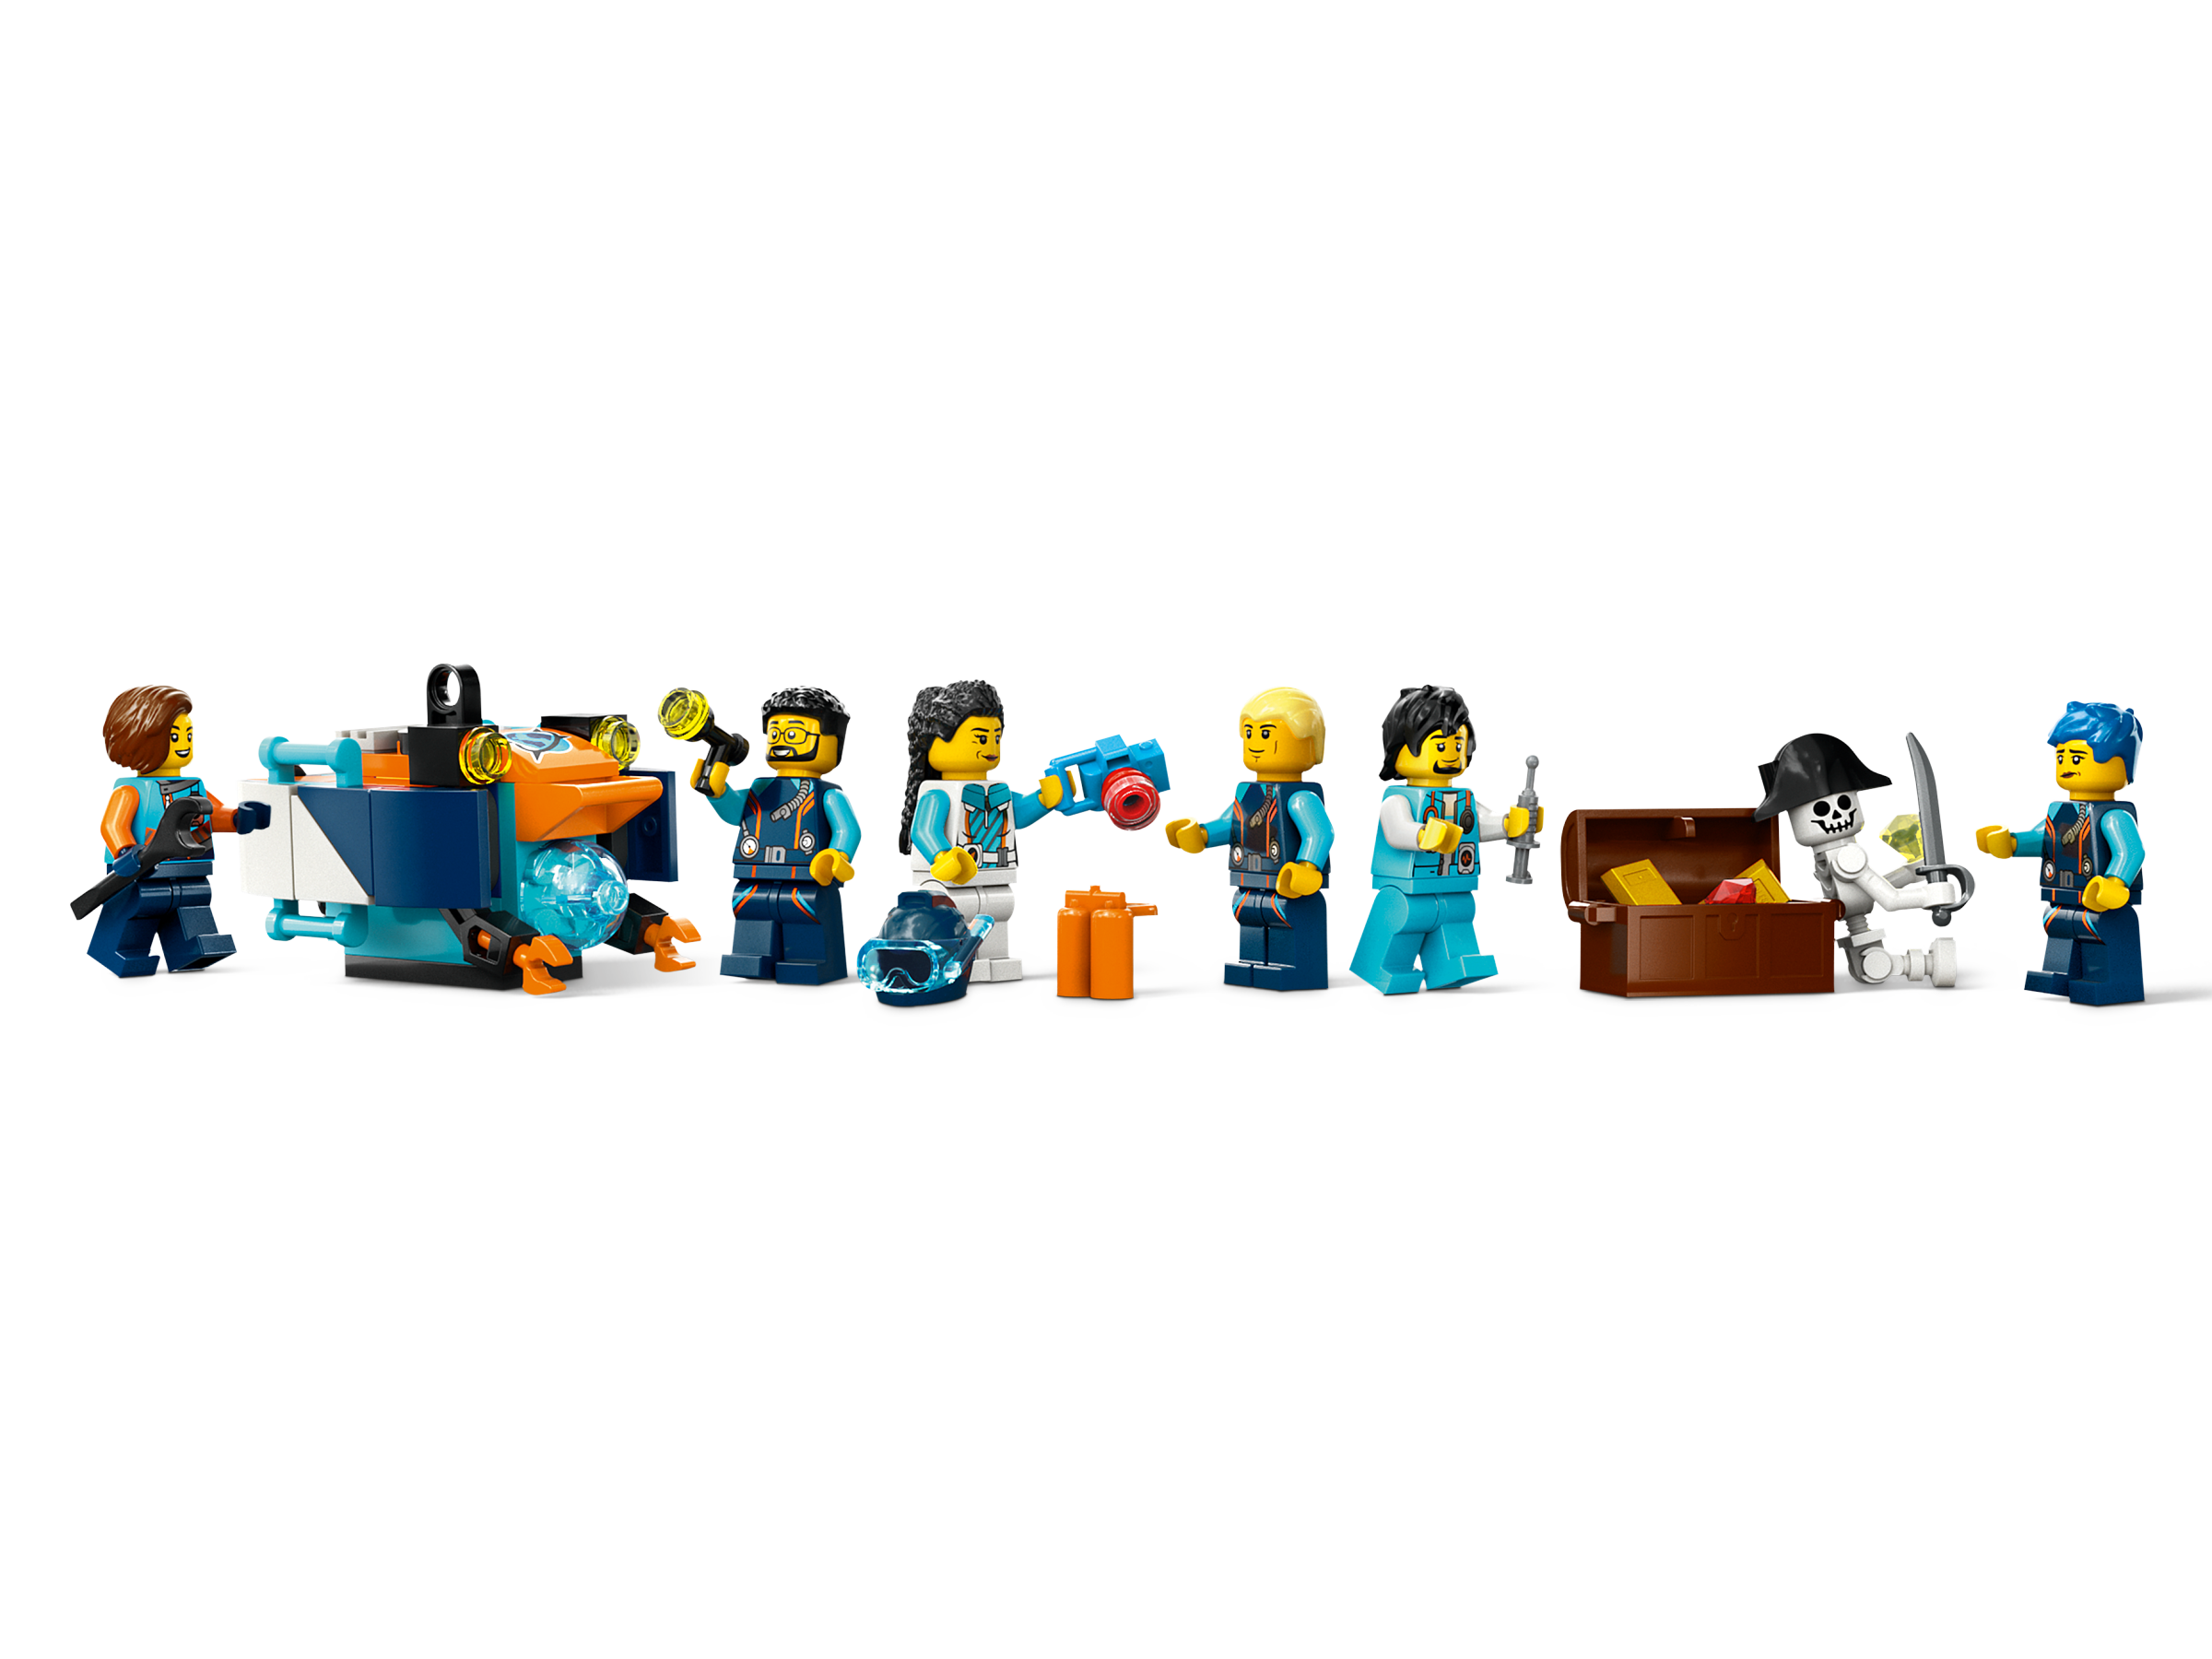 LEGO® City Sous-marin d'exploration 60379